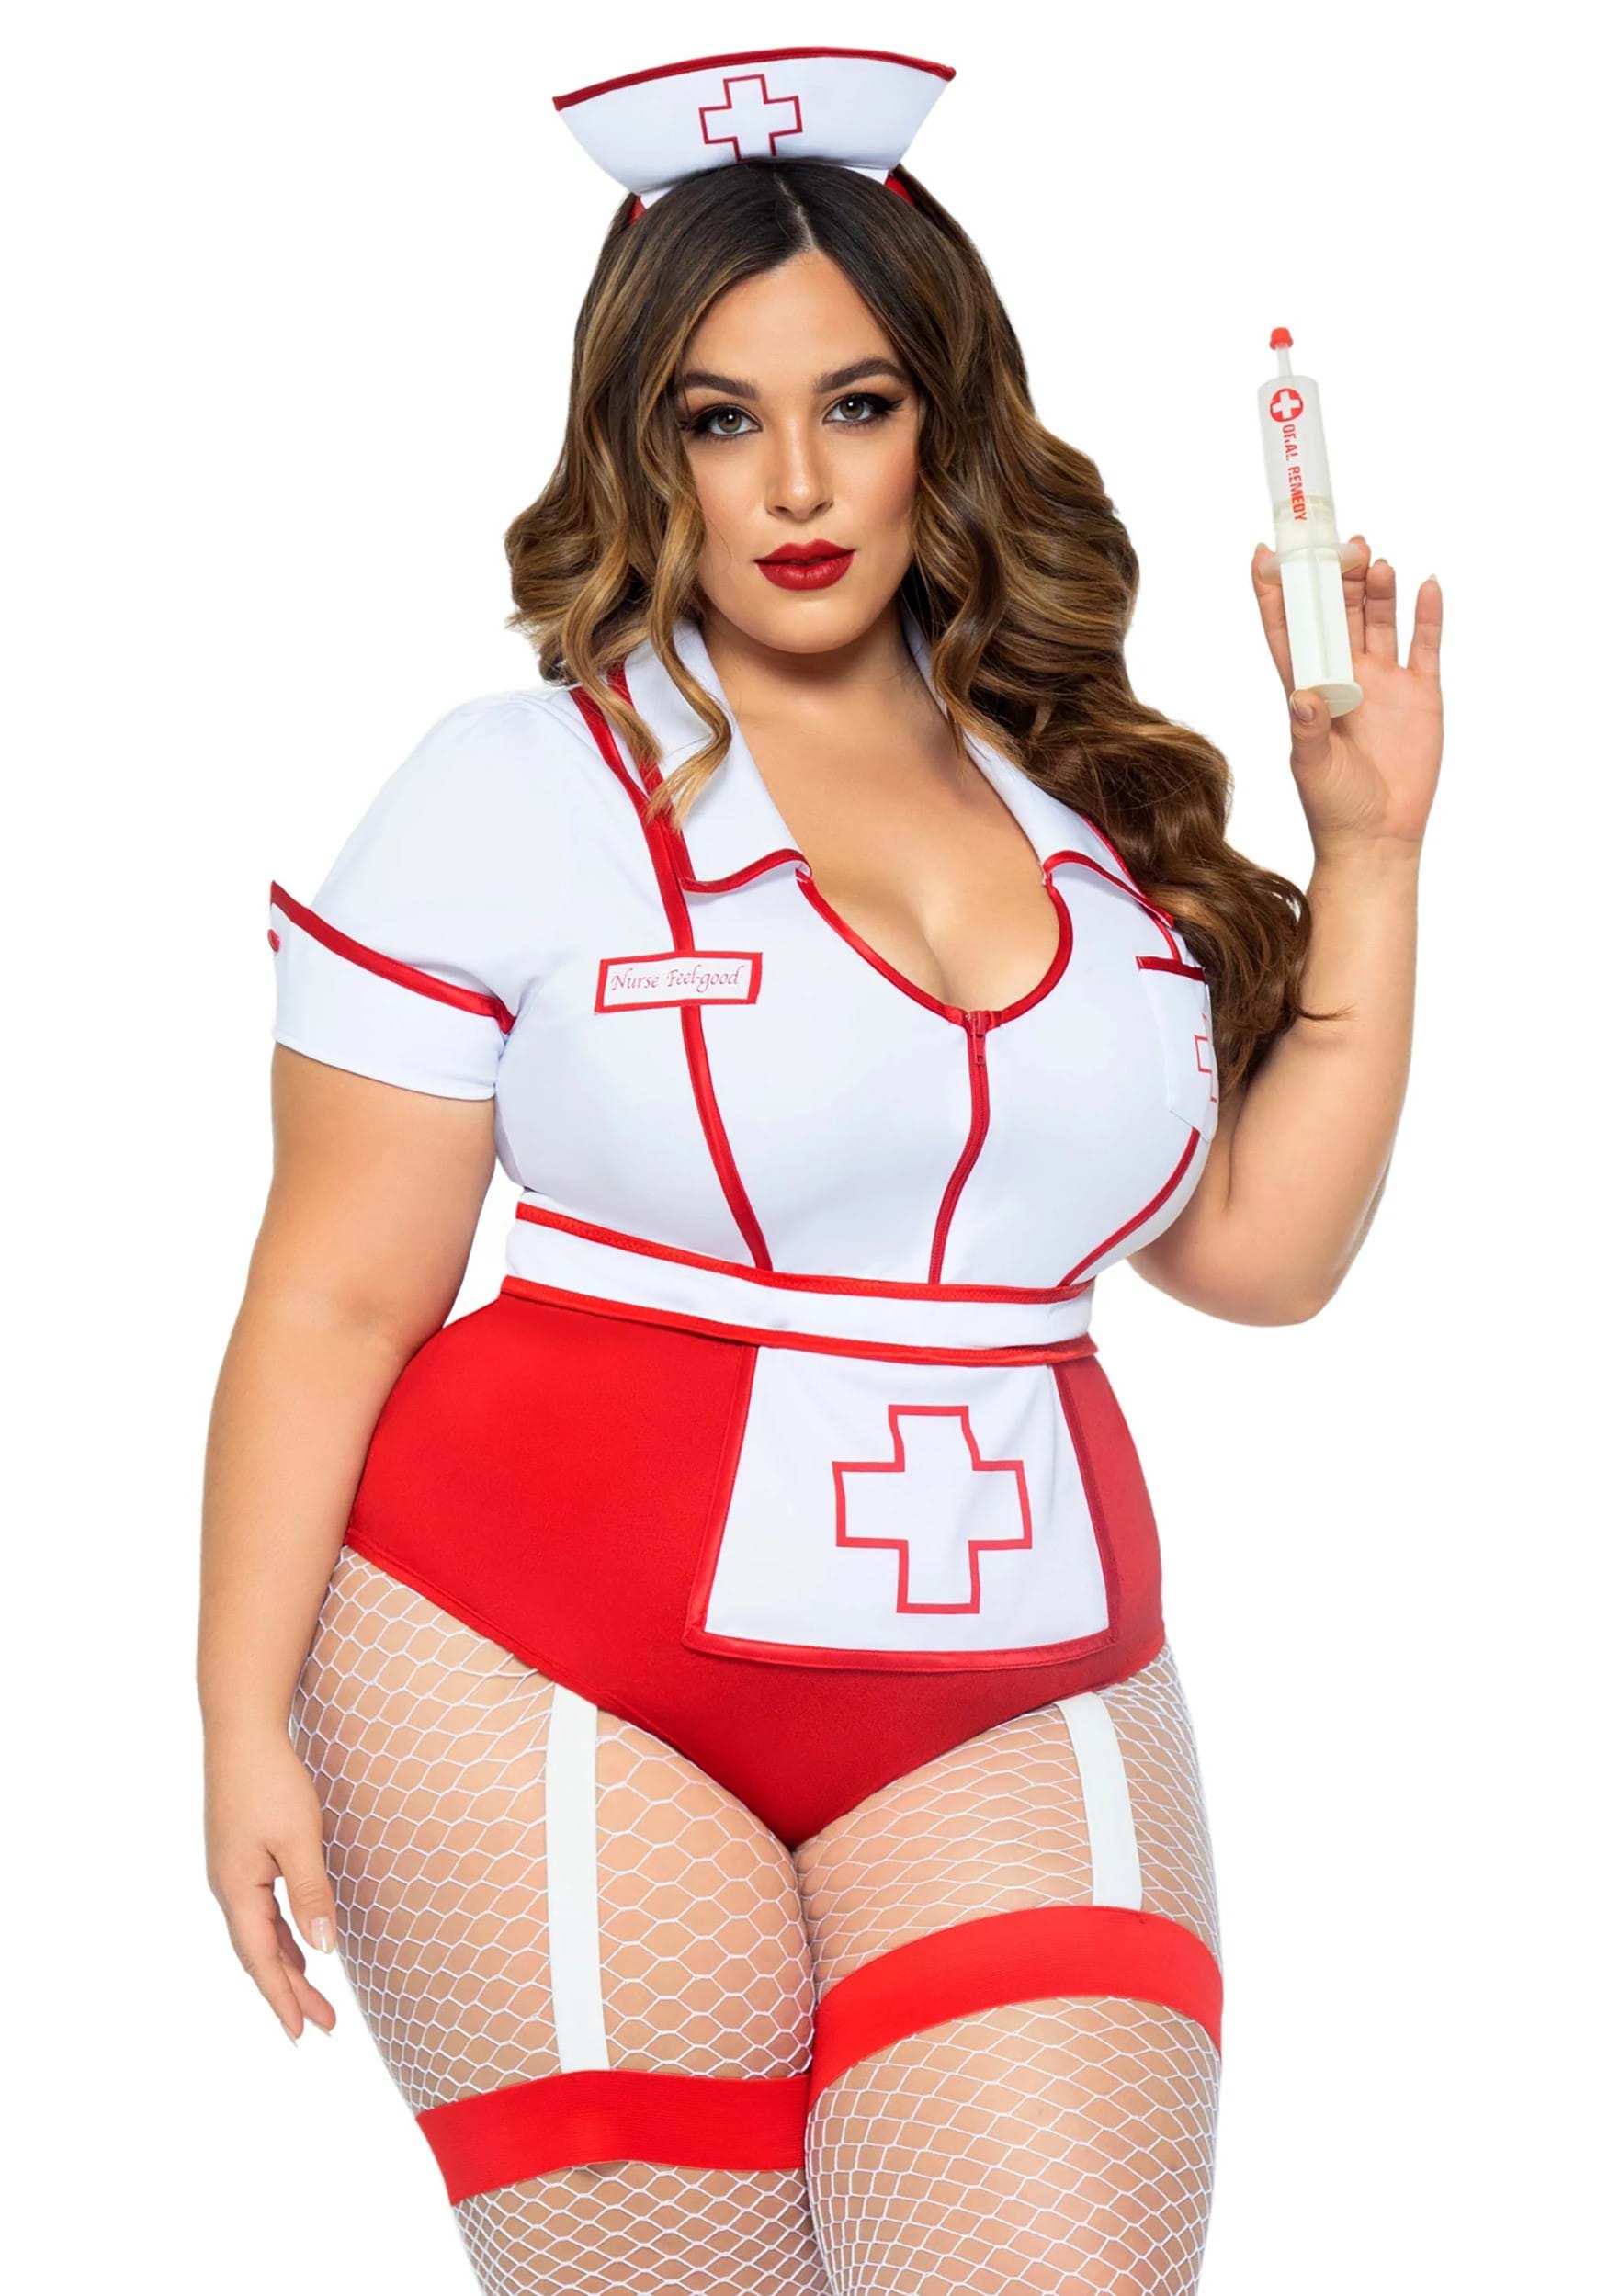 Sexy Nurses 3